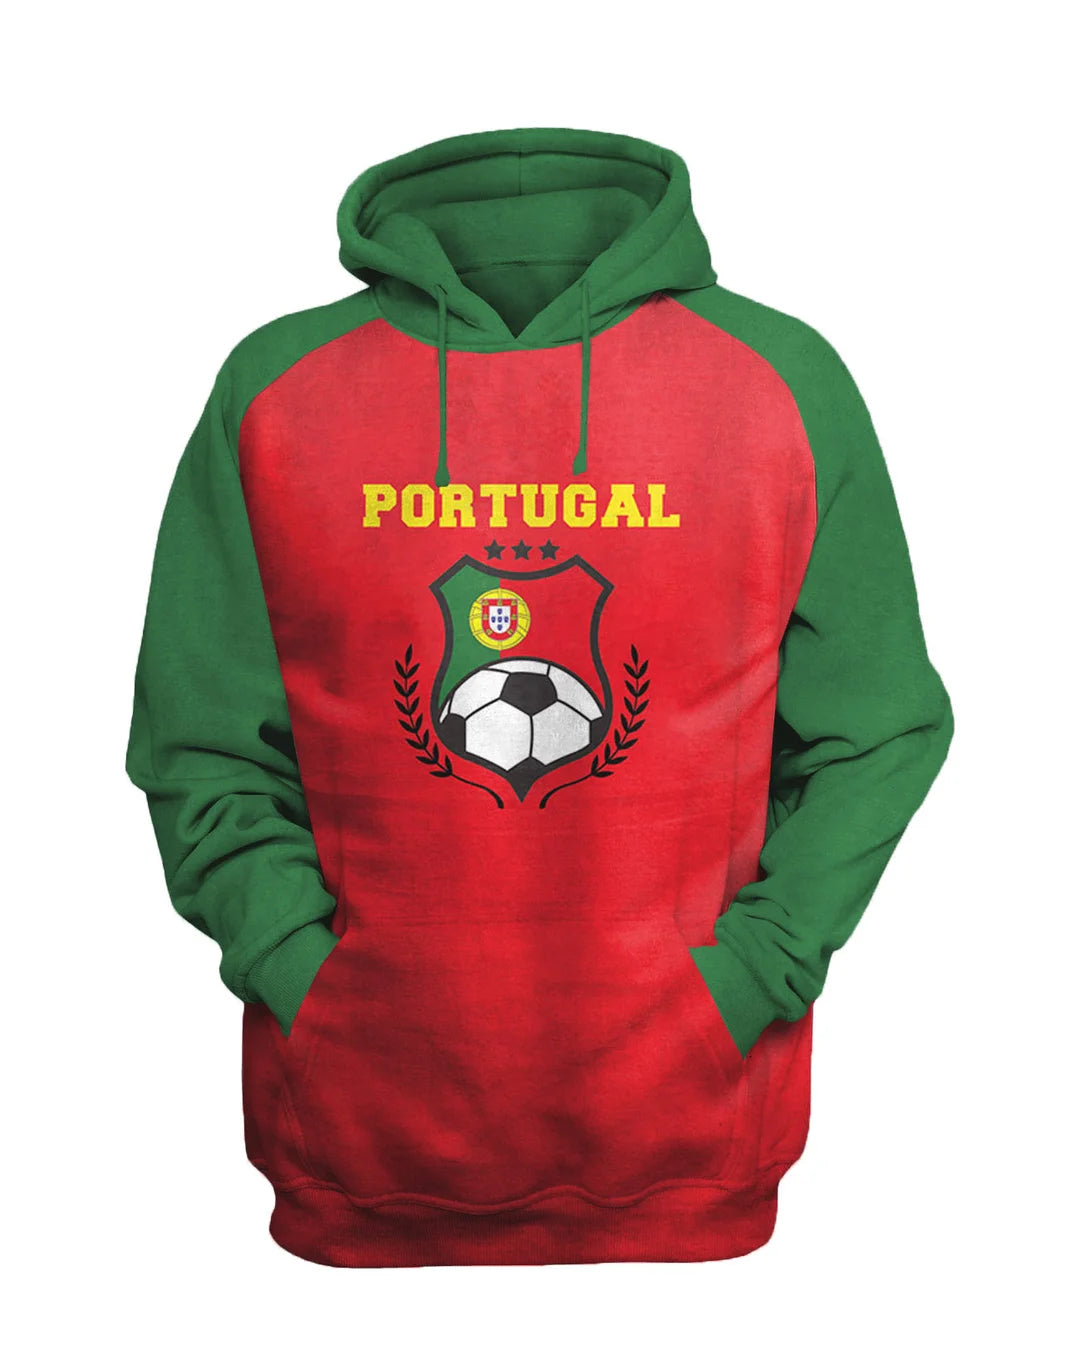 Portugal National Football Team Printed Sweatshirt Set